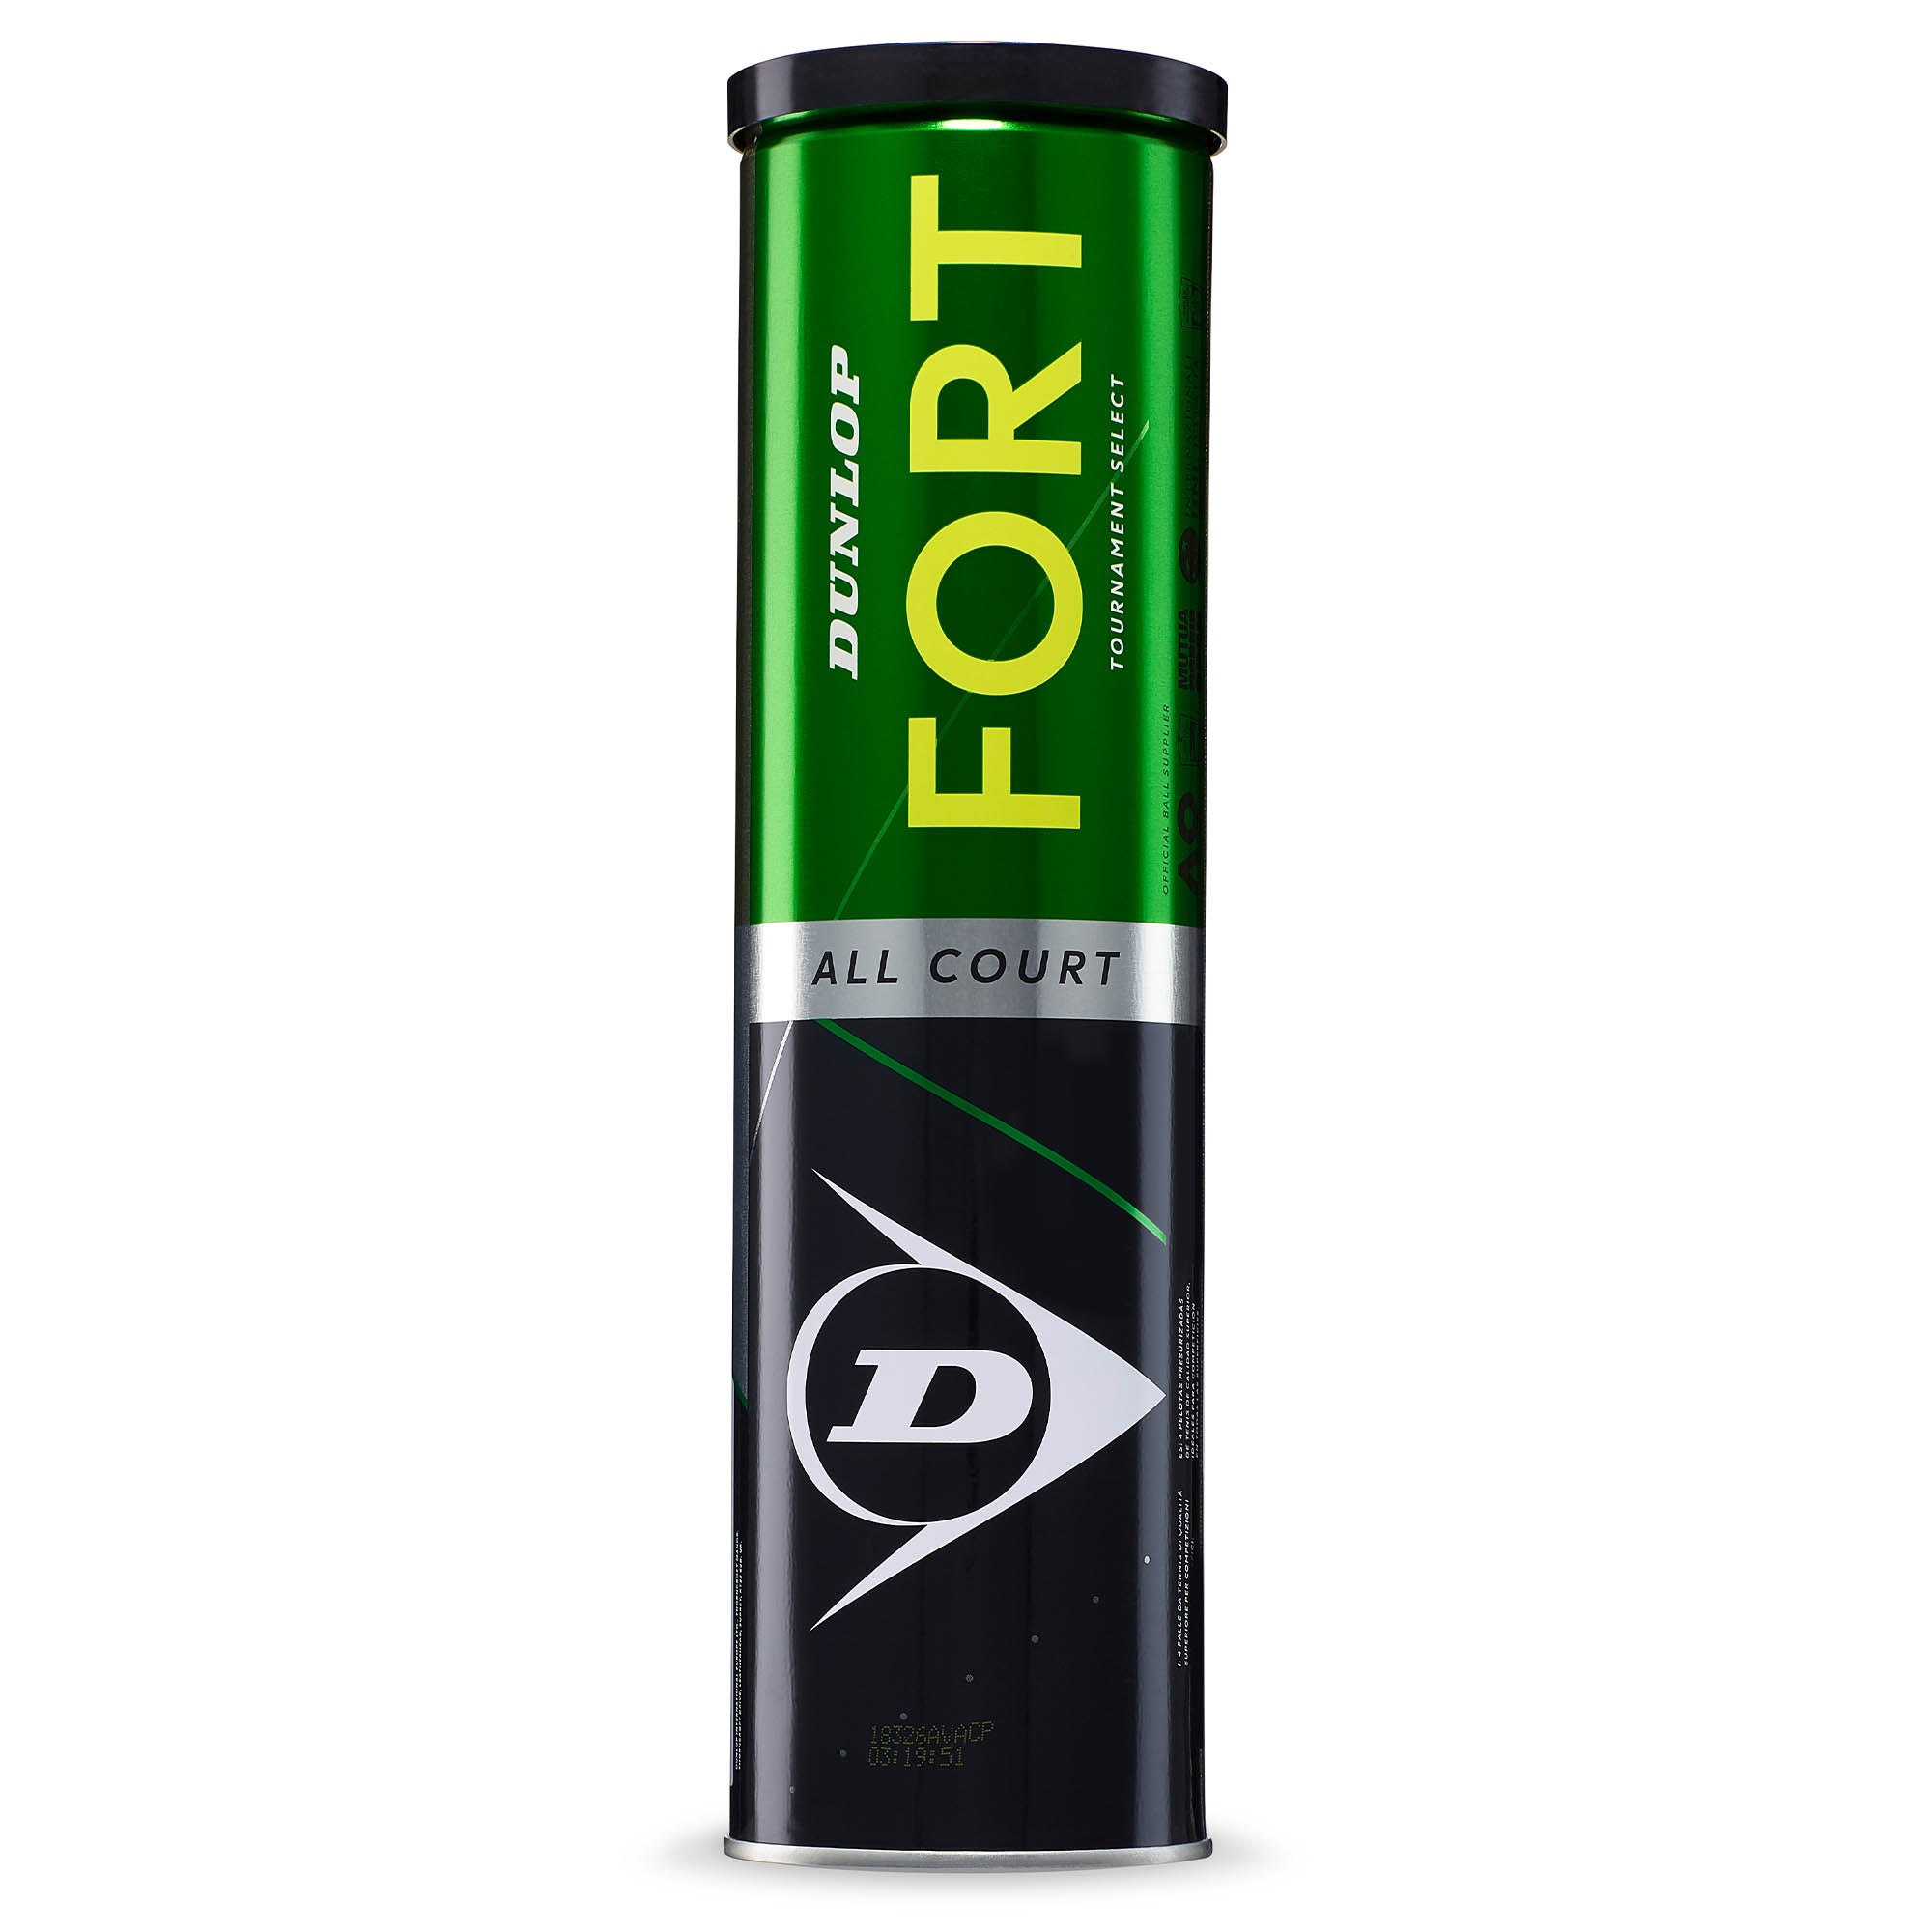 Dunlop Fort All Court Tournament Select Tennis Balls - Tube of 4